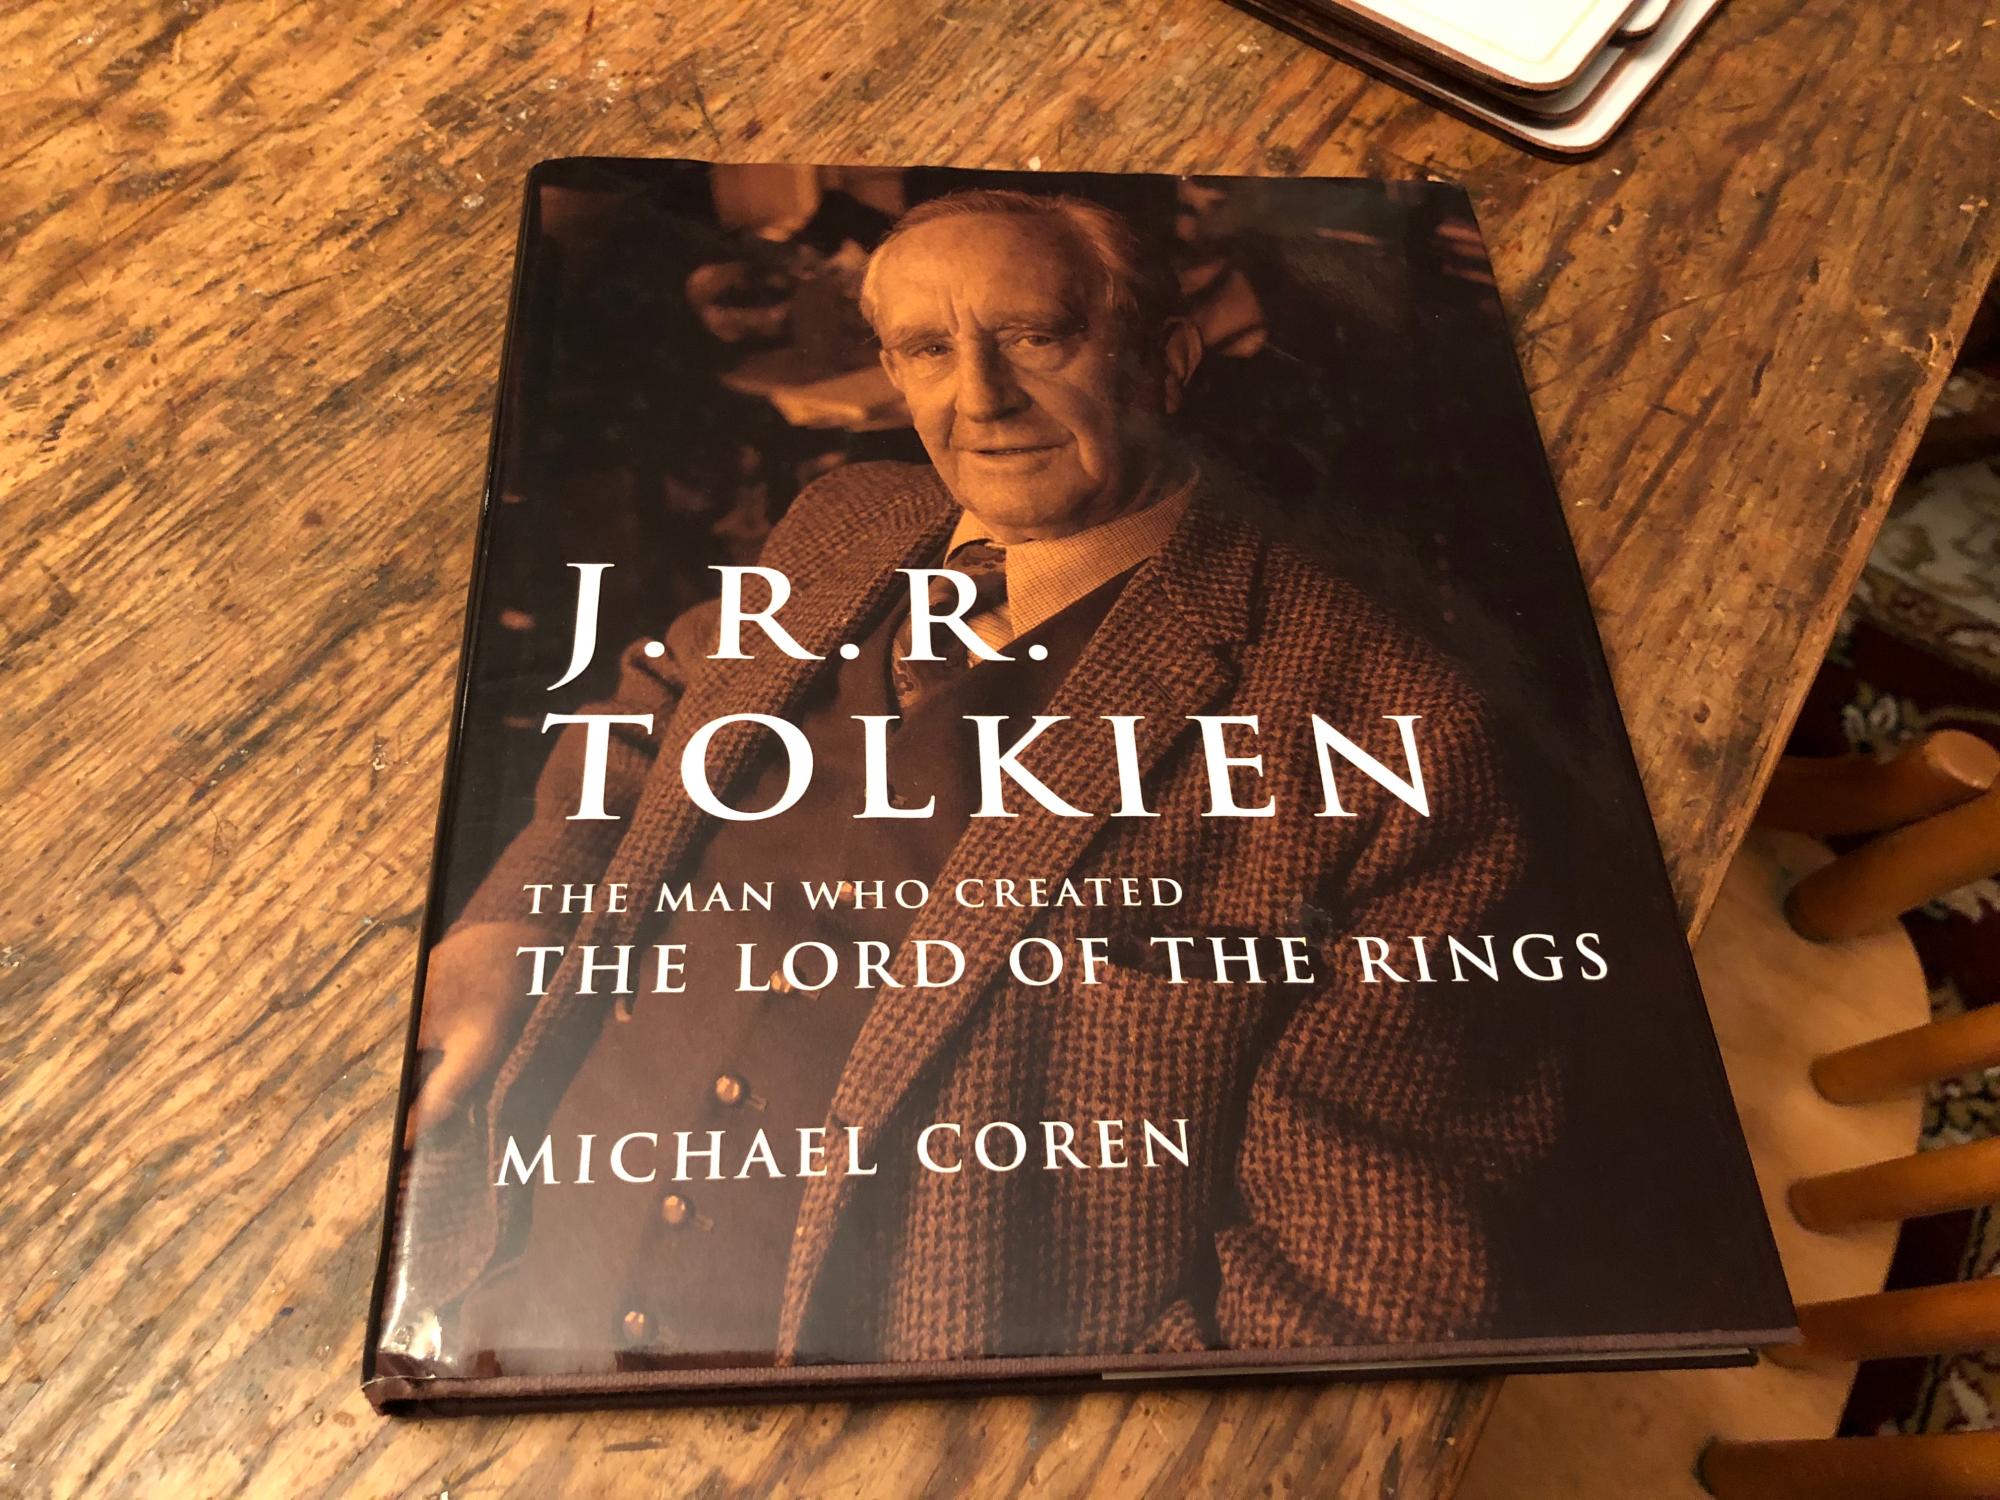 Tolkien's Legendarium: Mythological Writings Beyond Lord of the Rings